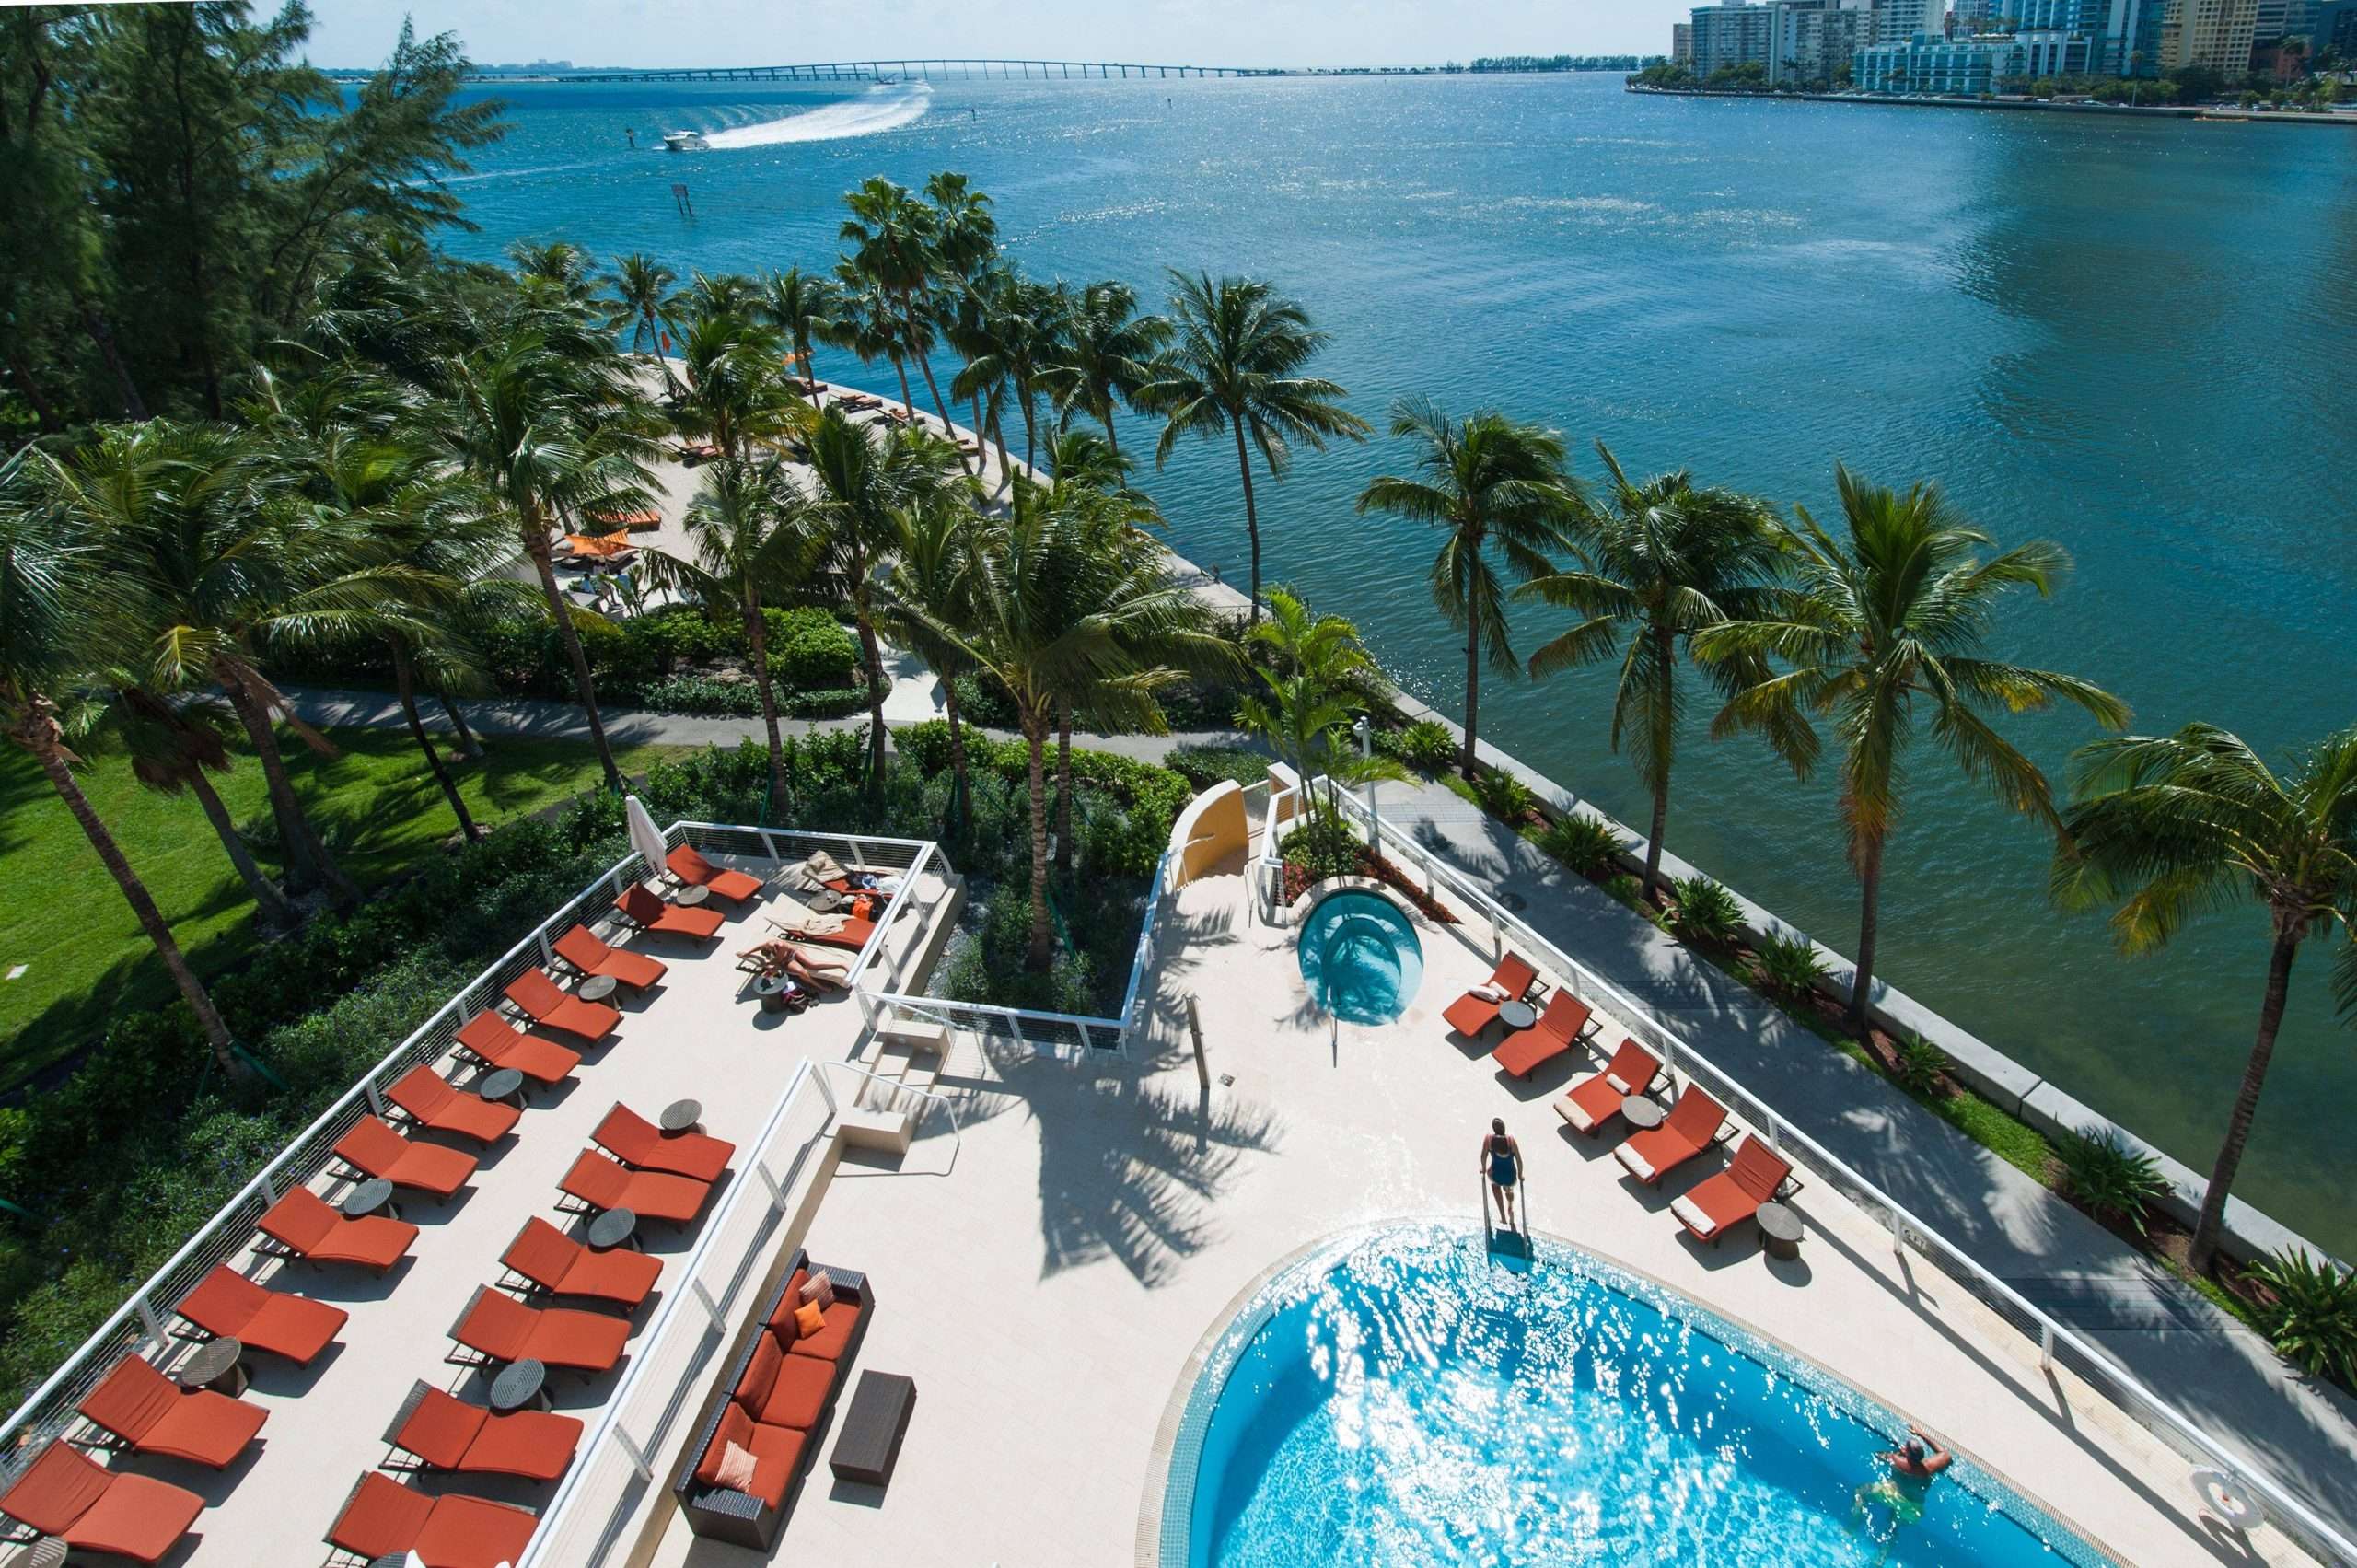 Hotels near miami cruise port ALQURUMRESORT.COM